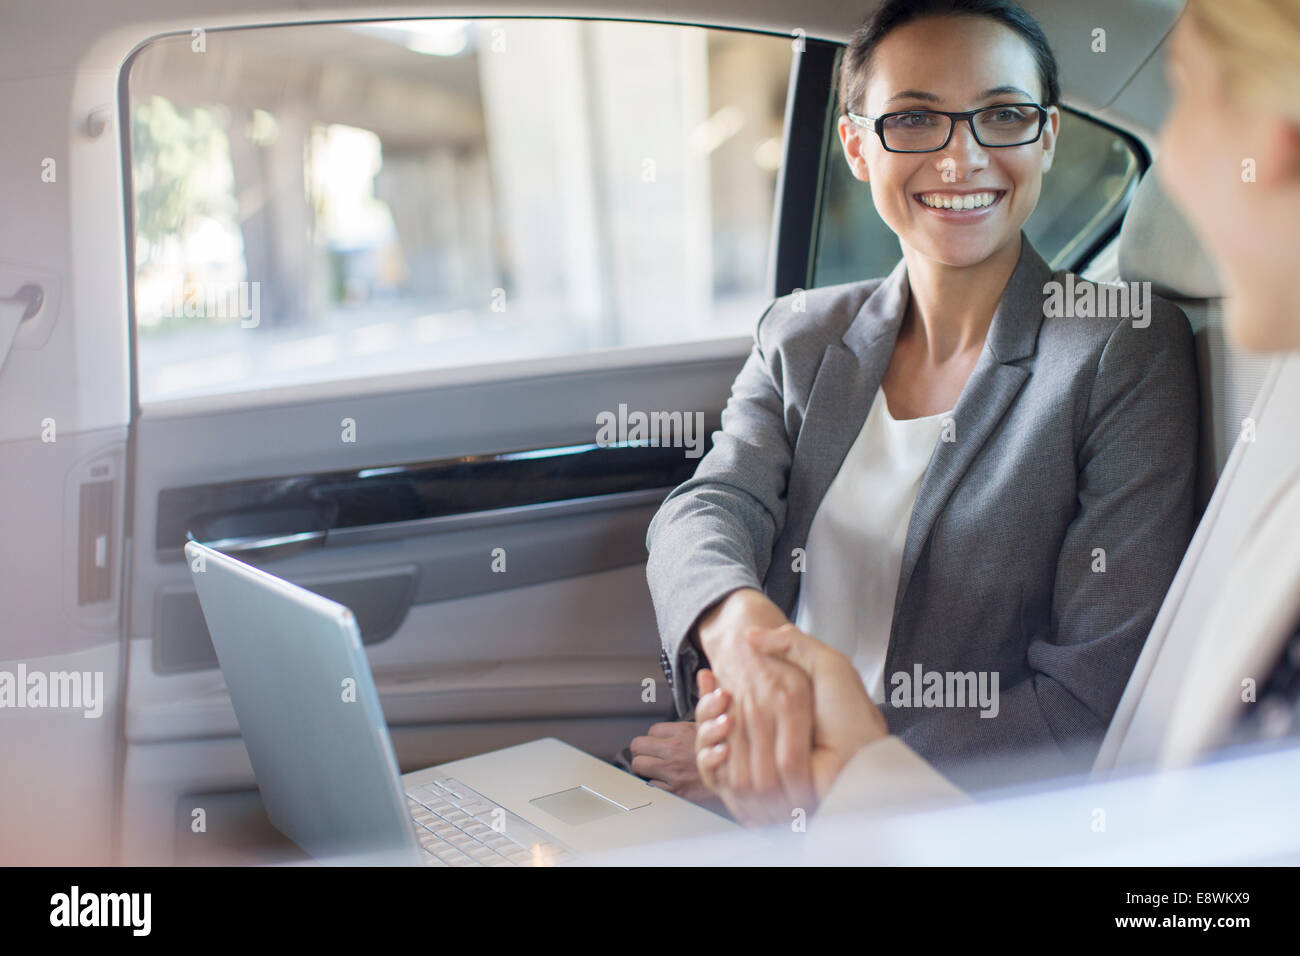 Businesswomen shaking hands in car Stock Photo